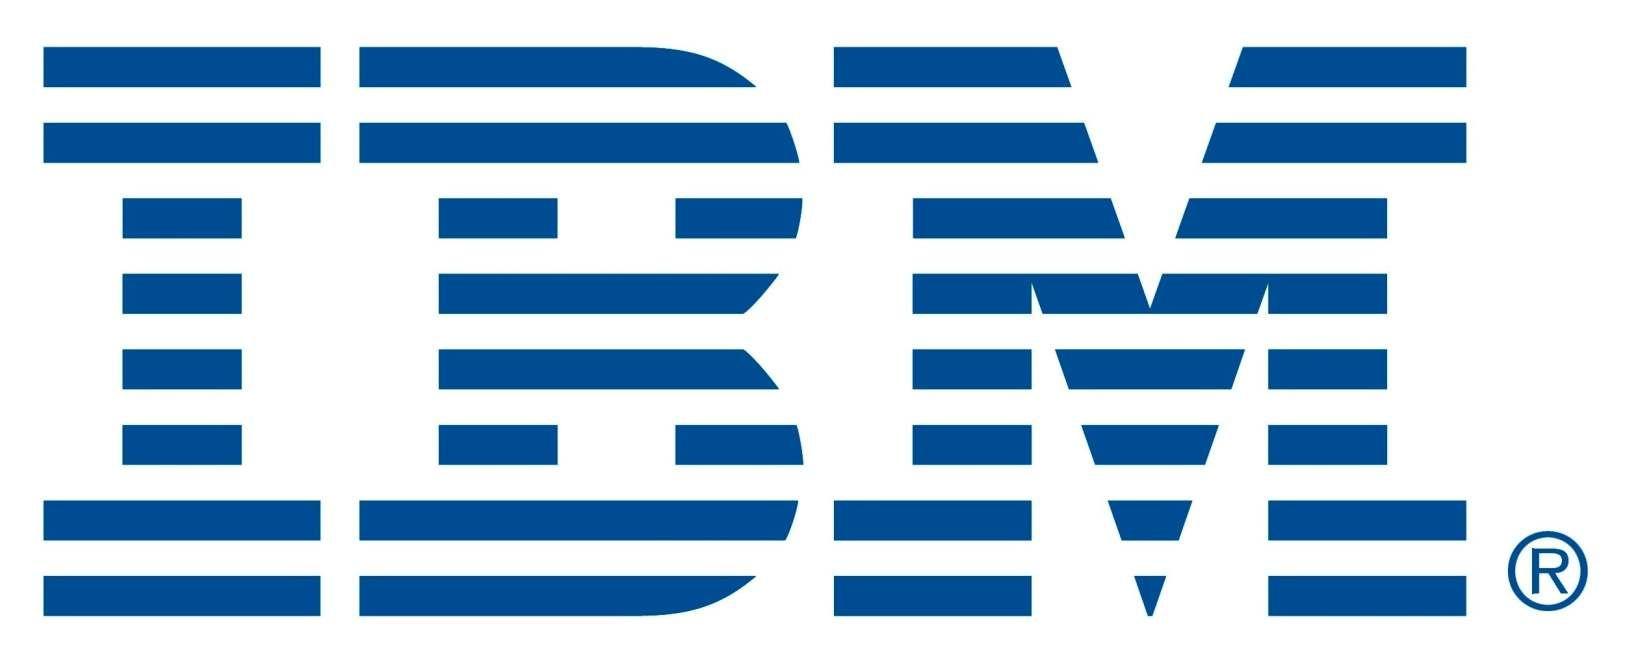 IBM Vector Logo - IBM Logo】. IBM Logo Vector Design PNG Free Download